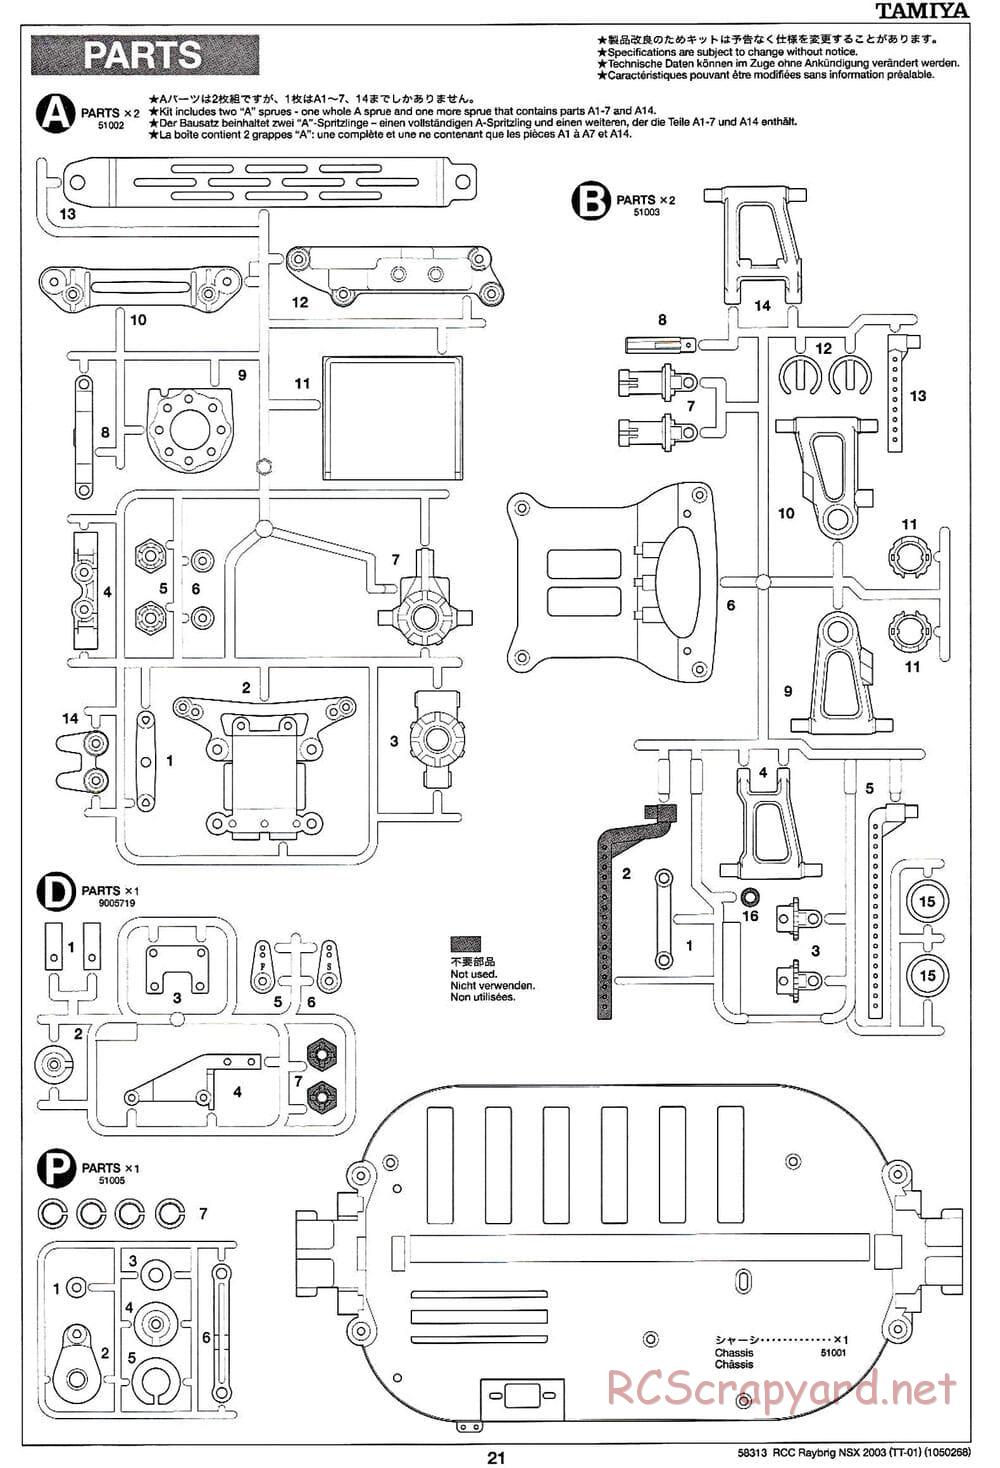 Tamiya - Raybrig NSX 2003 - TT-01 Chassis - Manual - Page 21